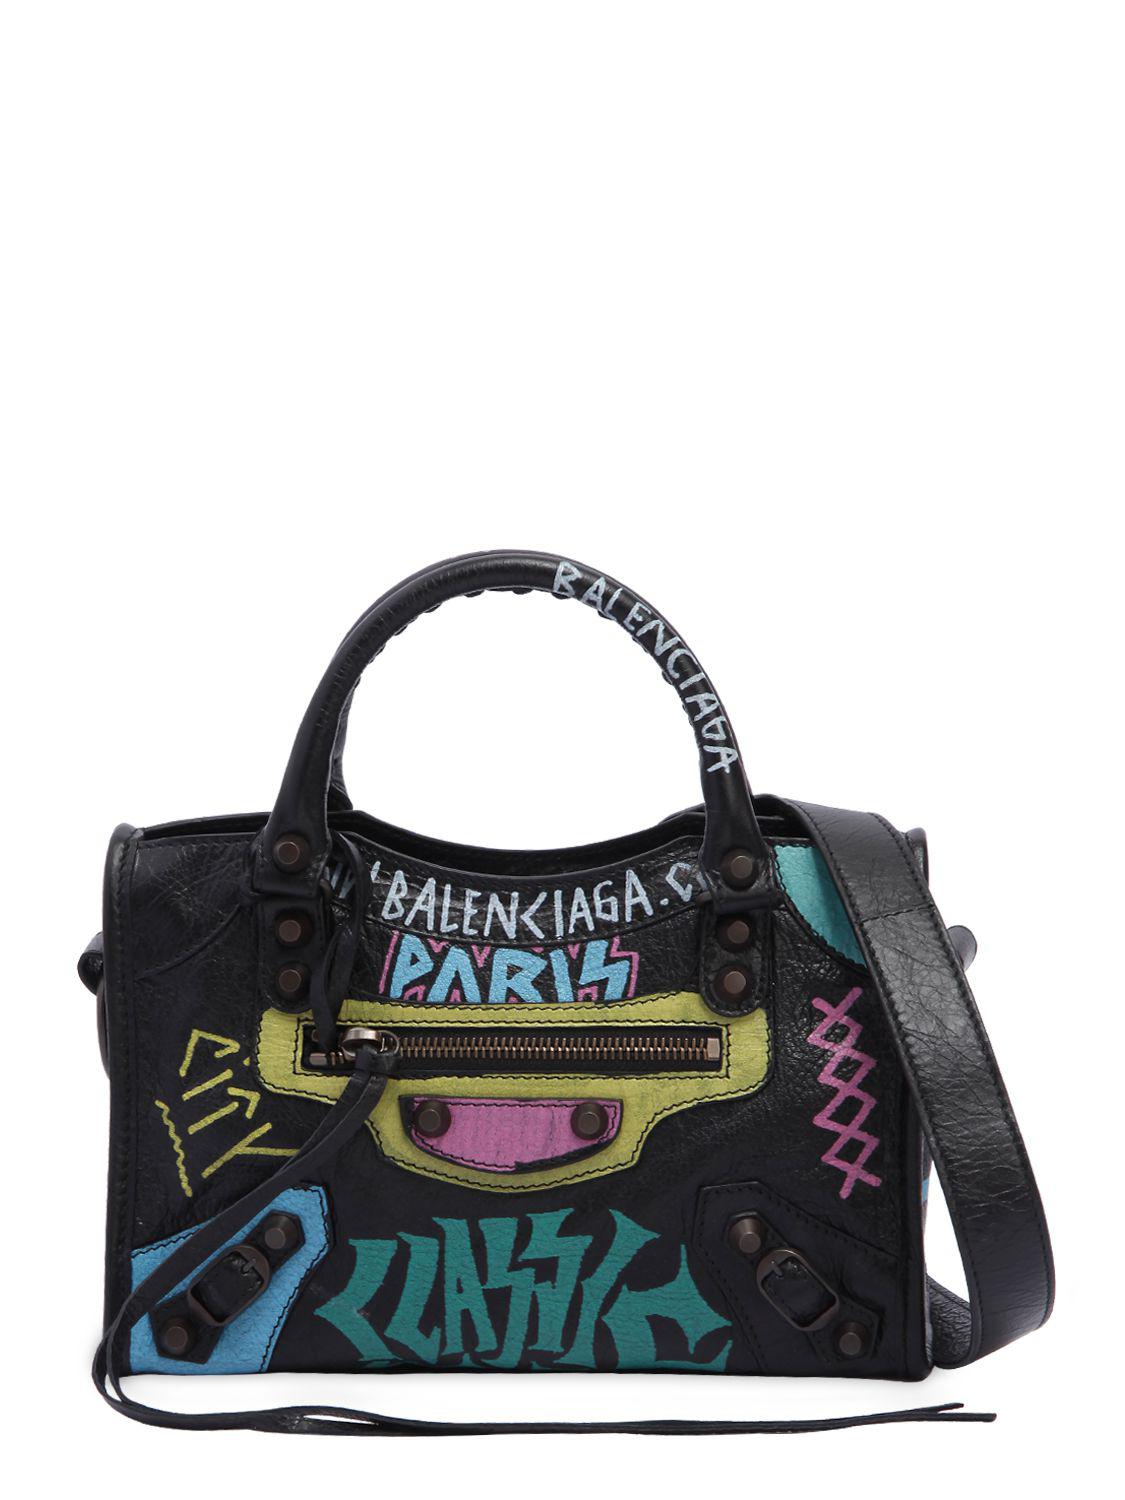 Balenciaga Mini Classic City Graffiti Leather Bag in Black - Lyst